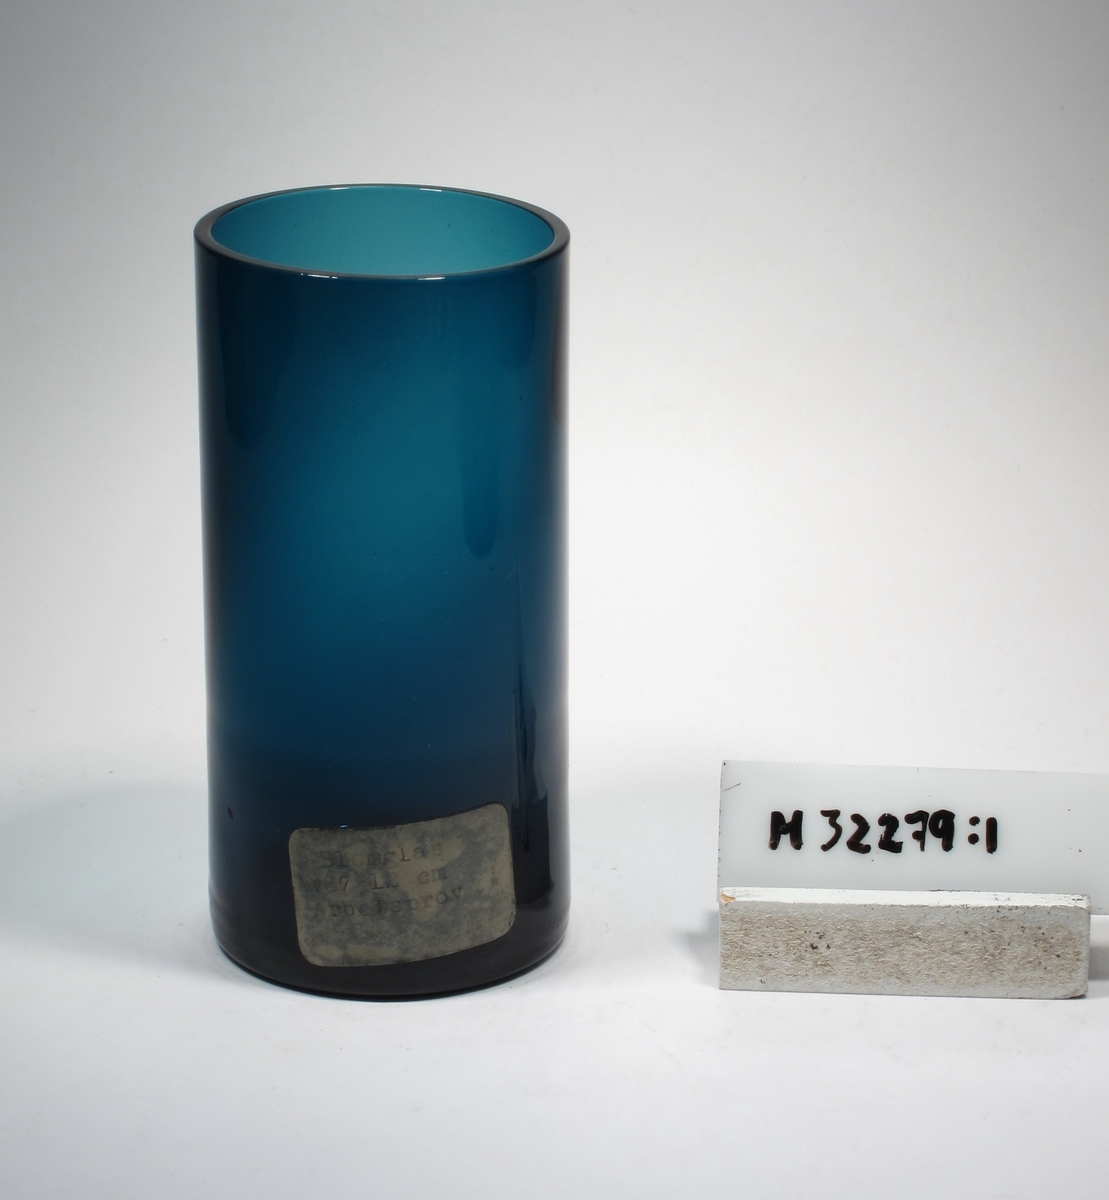 Cylinderformat blomglas.
Lapp: "Blomglas, A.V.12cm, Arbetsprov"